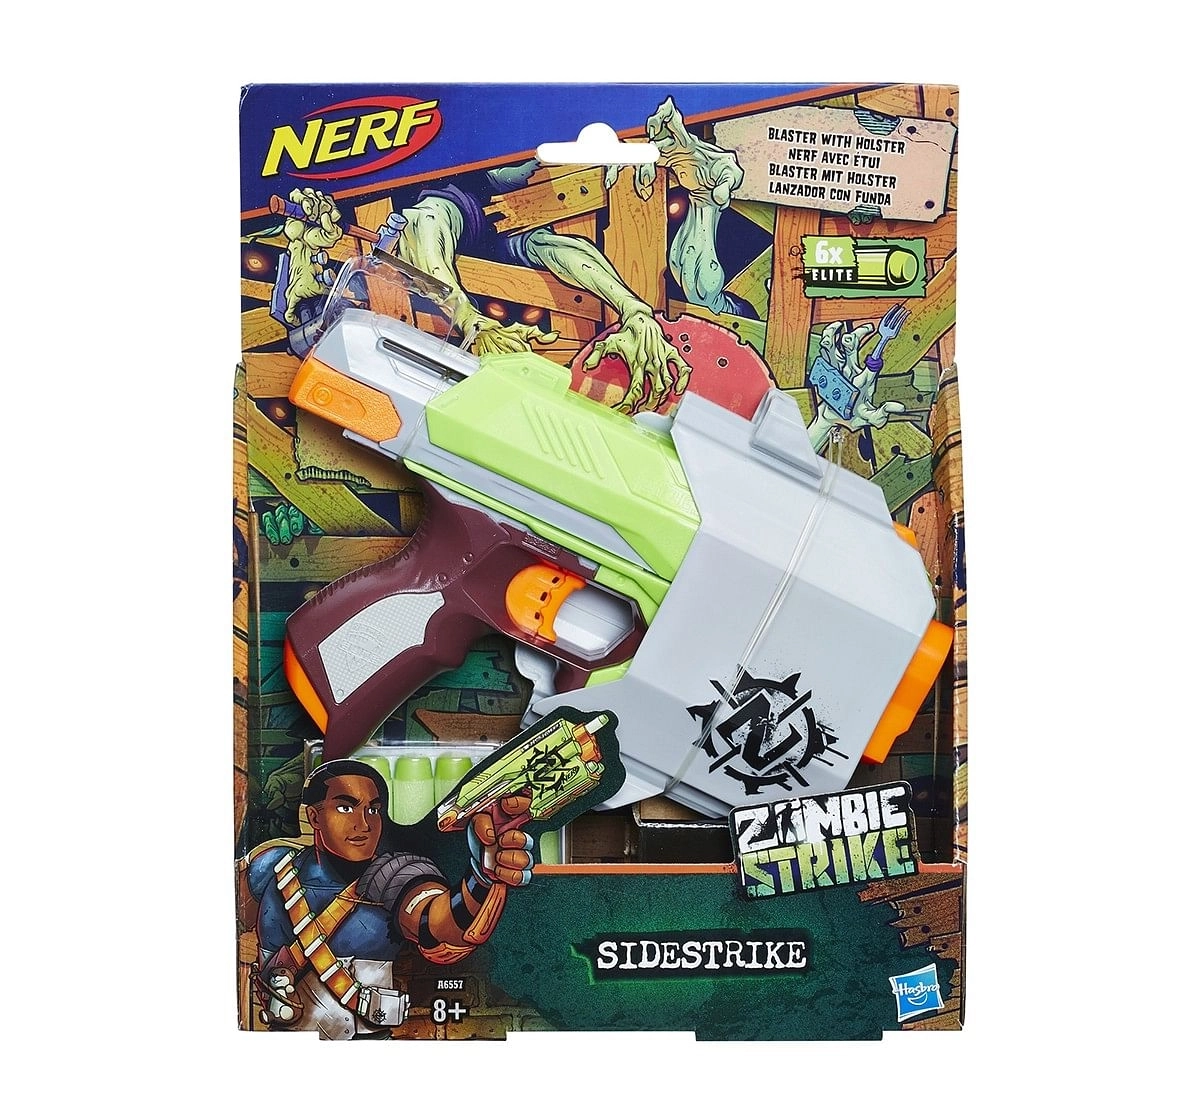 Nerf Zombie Strike Sidestrike Blasters for age 8Y+ 